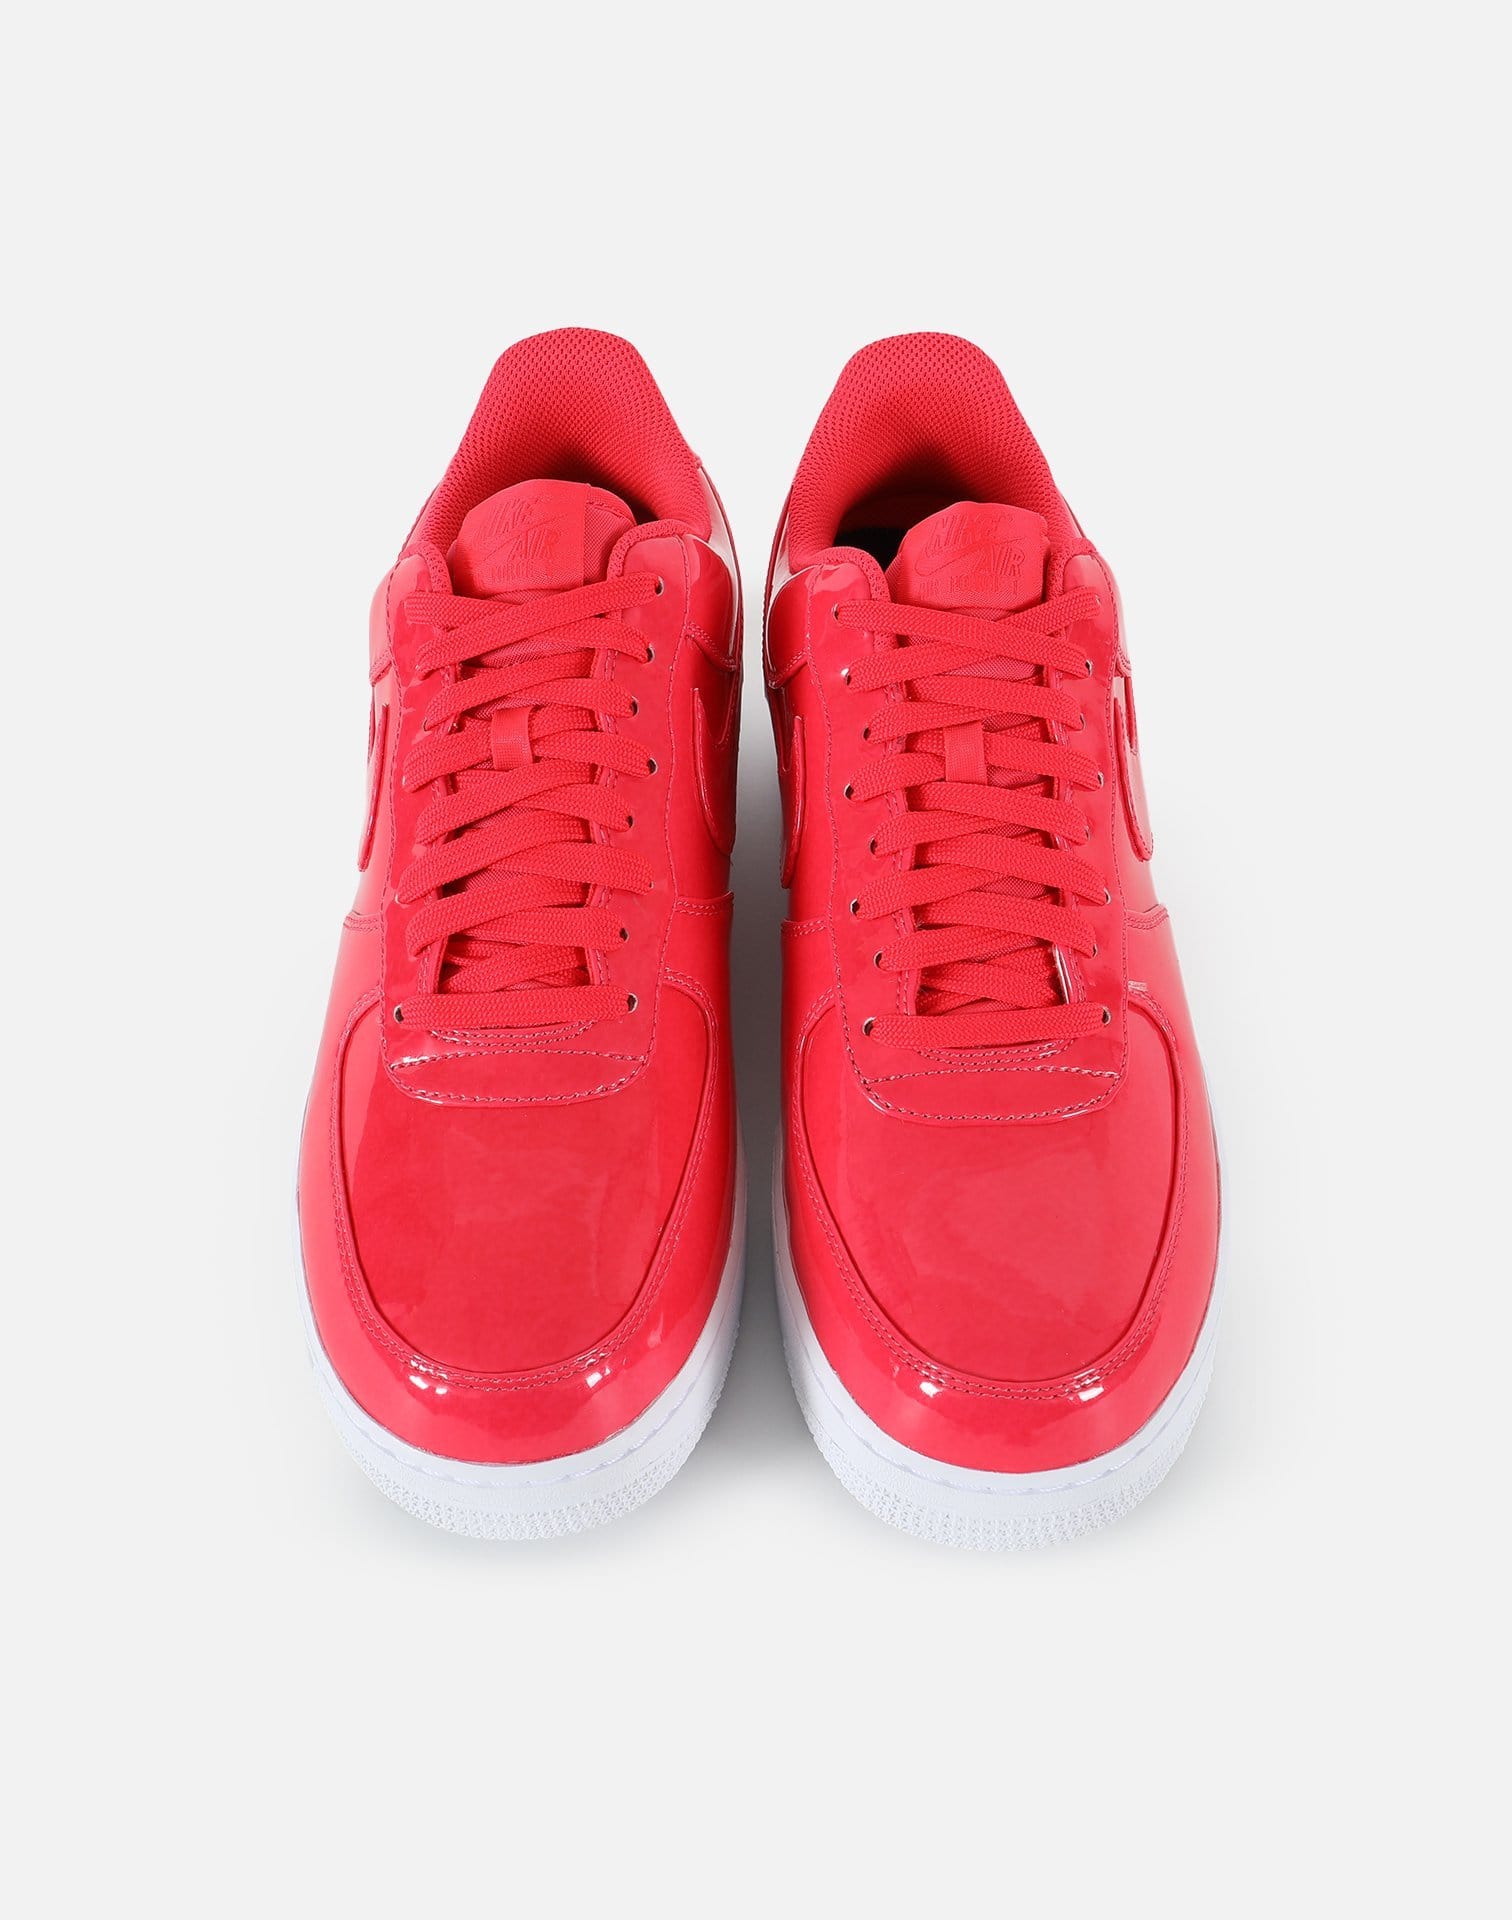 Nike Air Force 1 '07 LV8 UV Men's Shoes Siren Red/White aj9505-600 